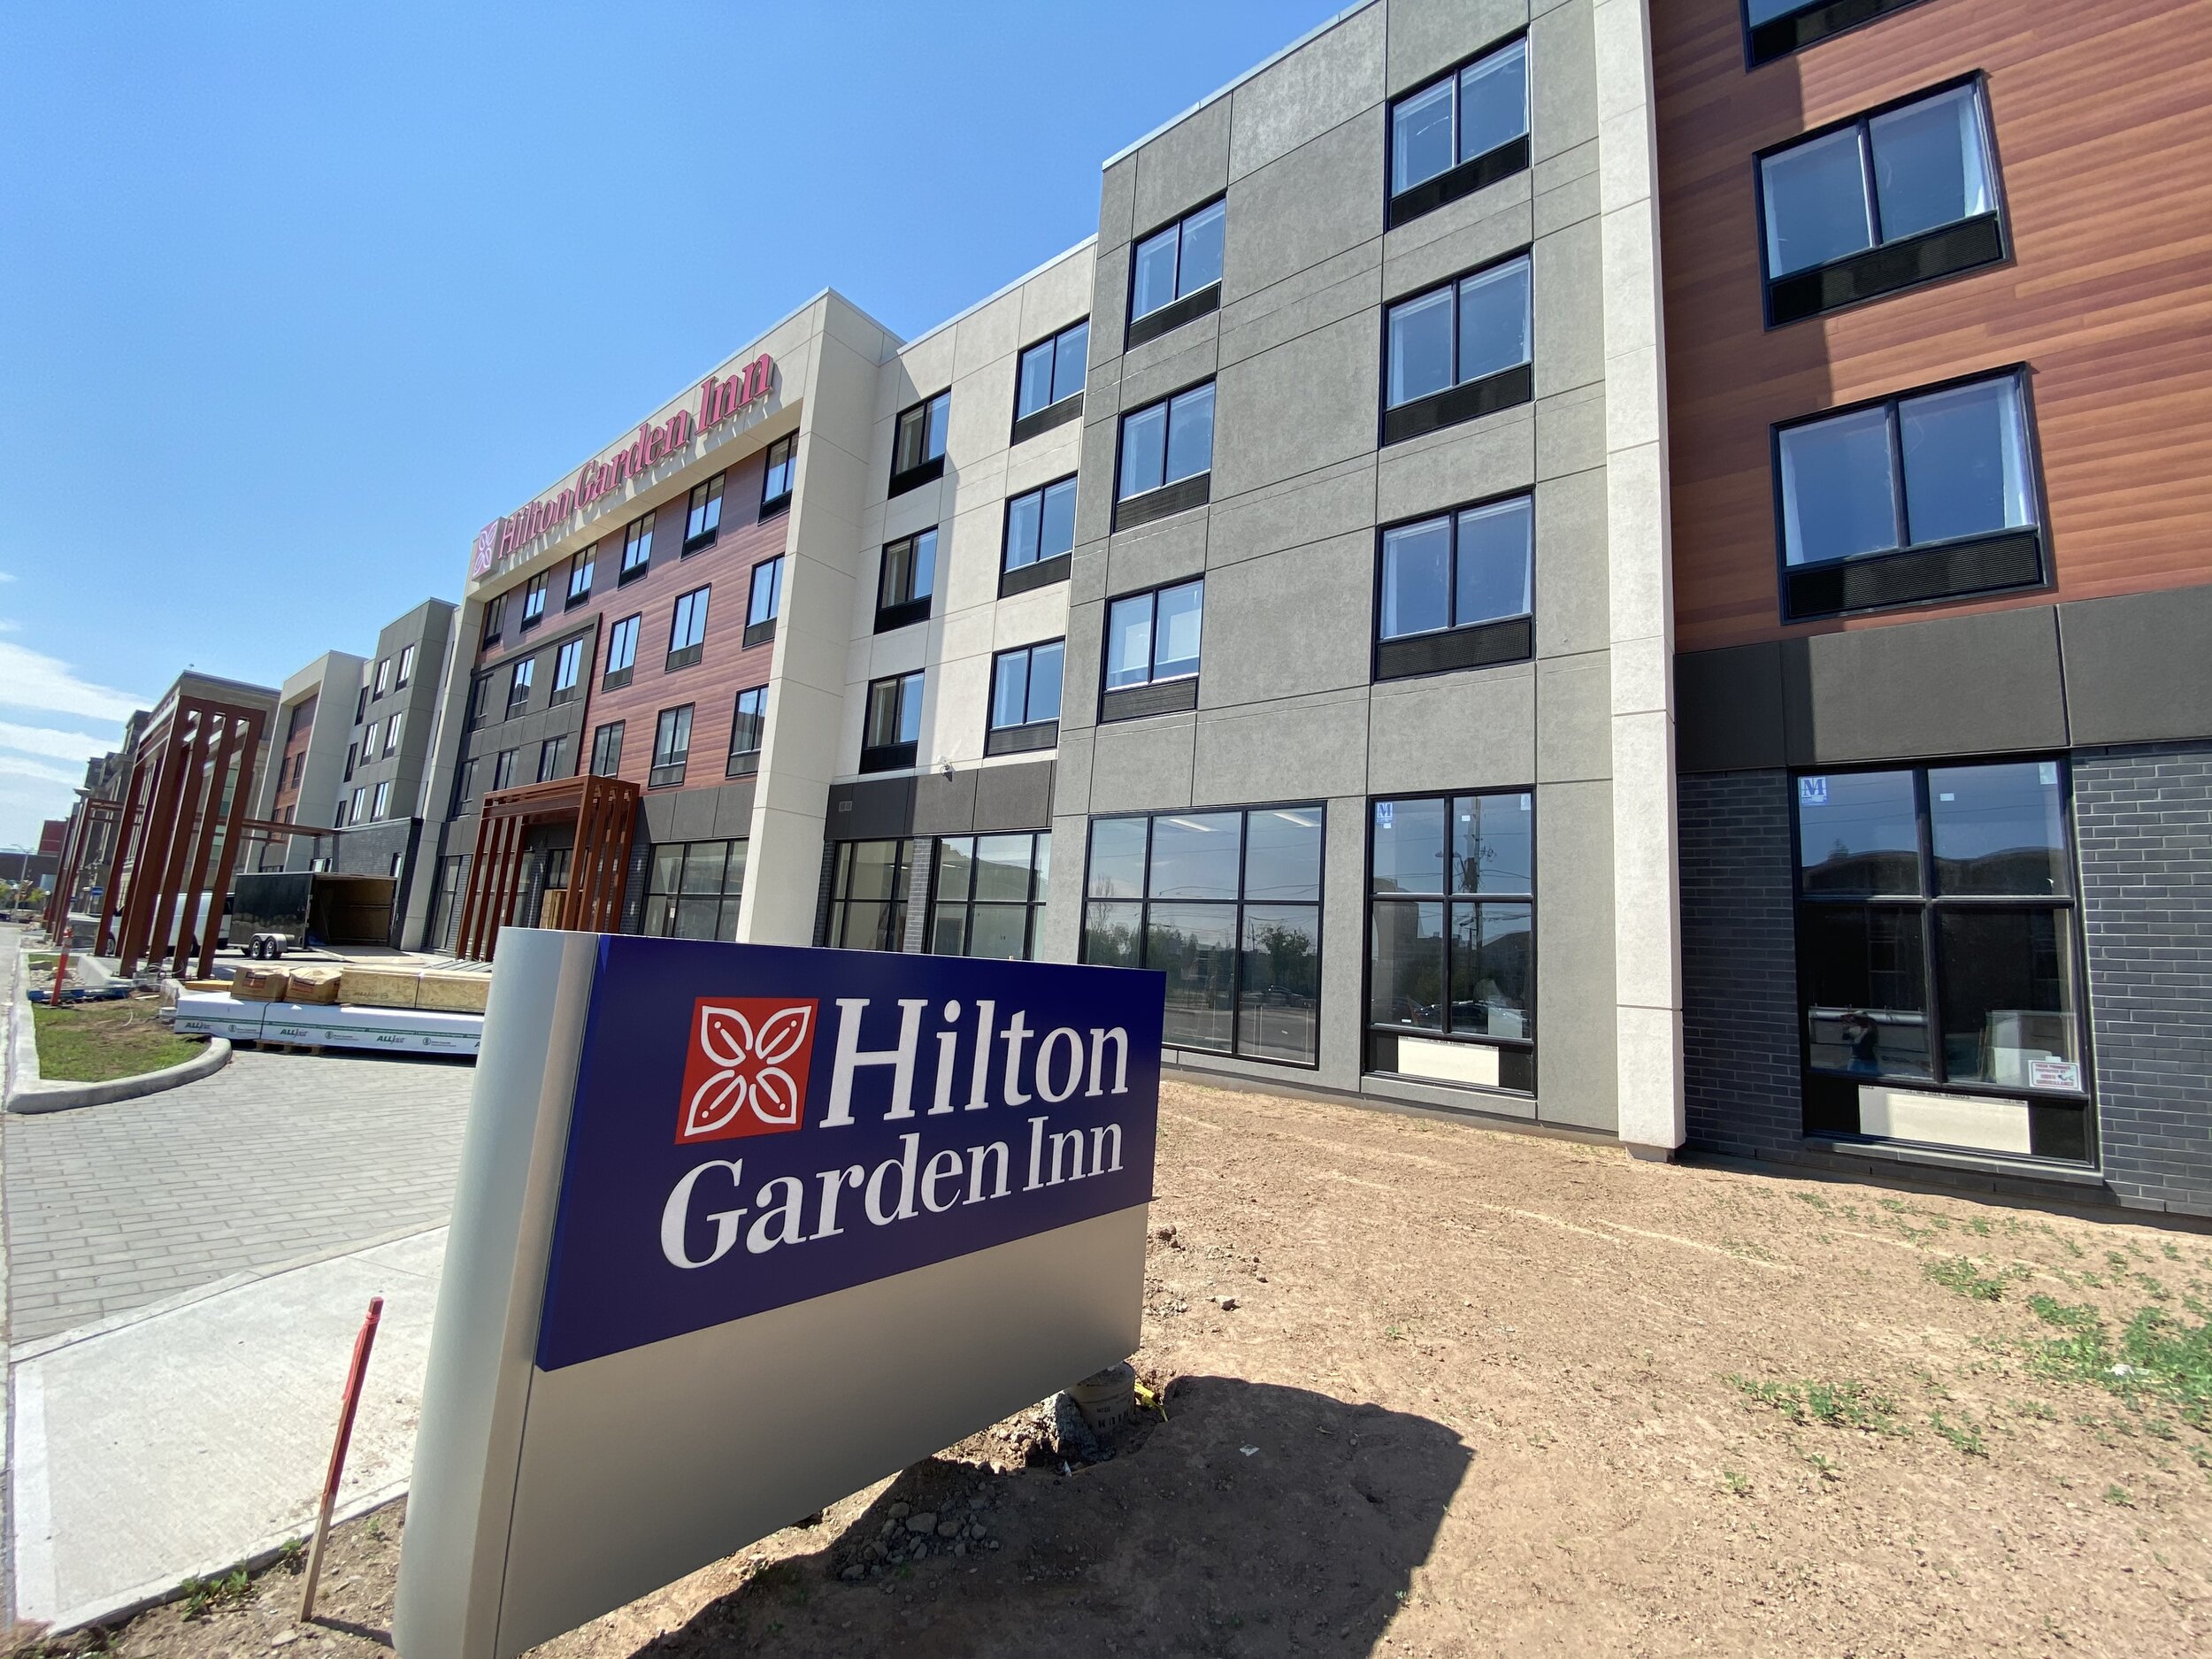 Hilton Garden Inn | Hotel Project (Copy) (Copy)